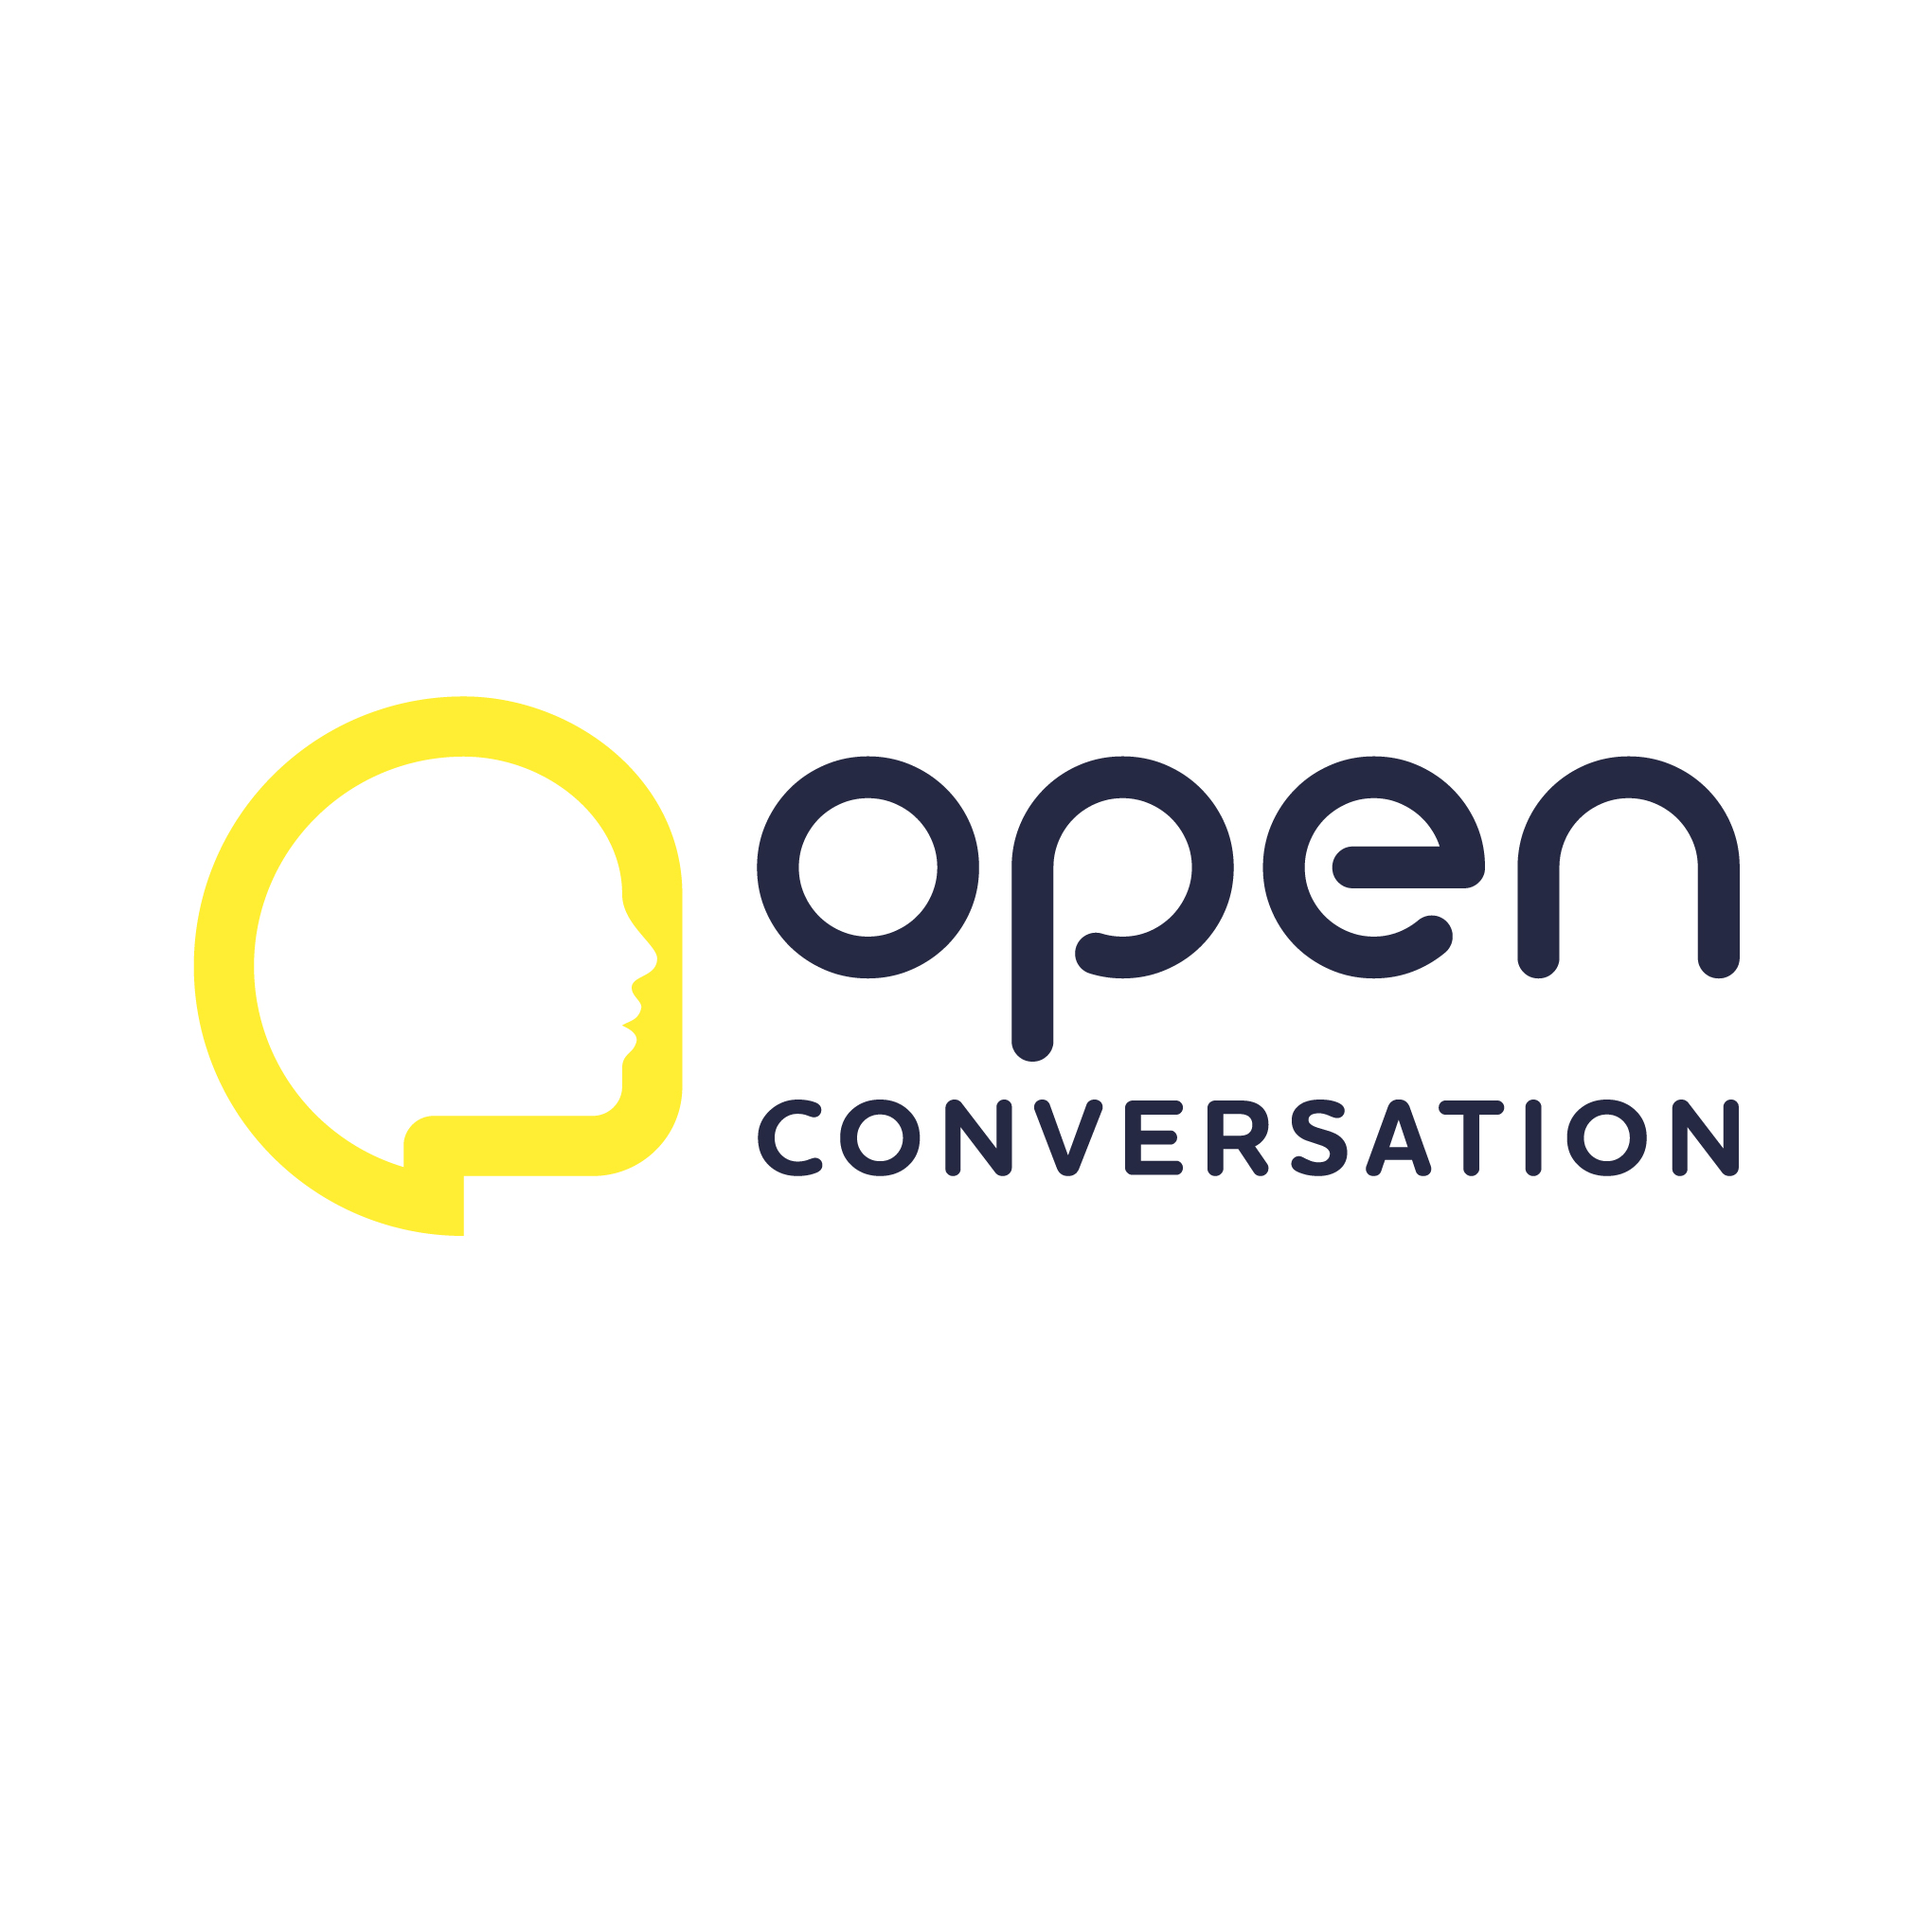 Open Conversation 1 (Horizontal - White Background).jpg